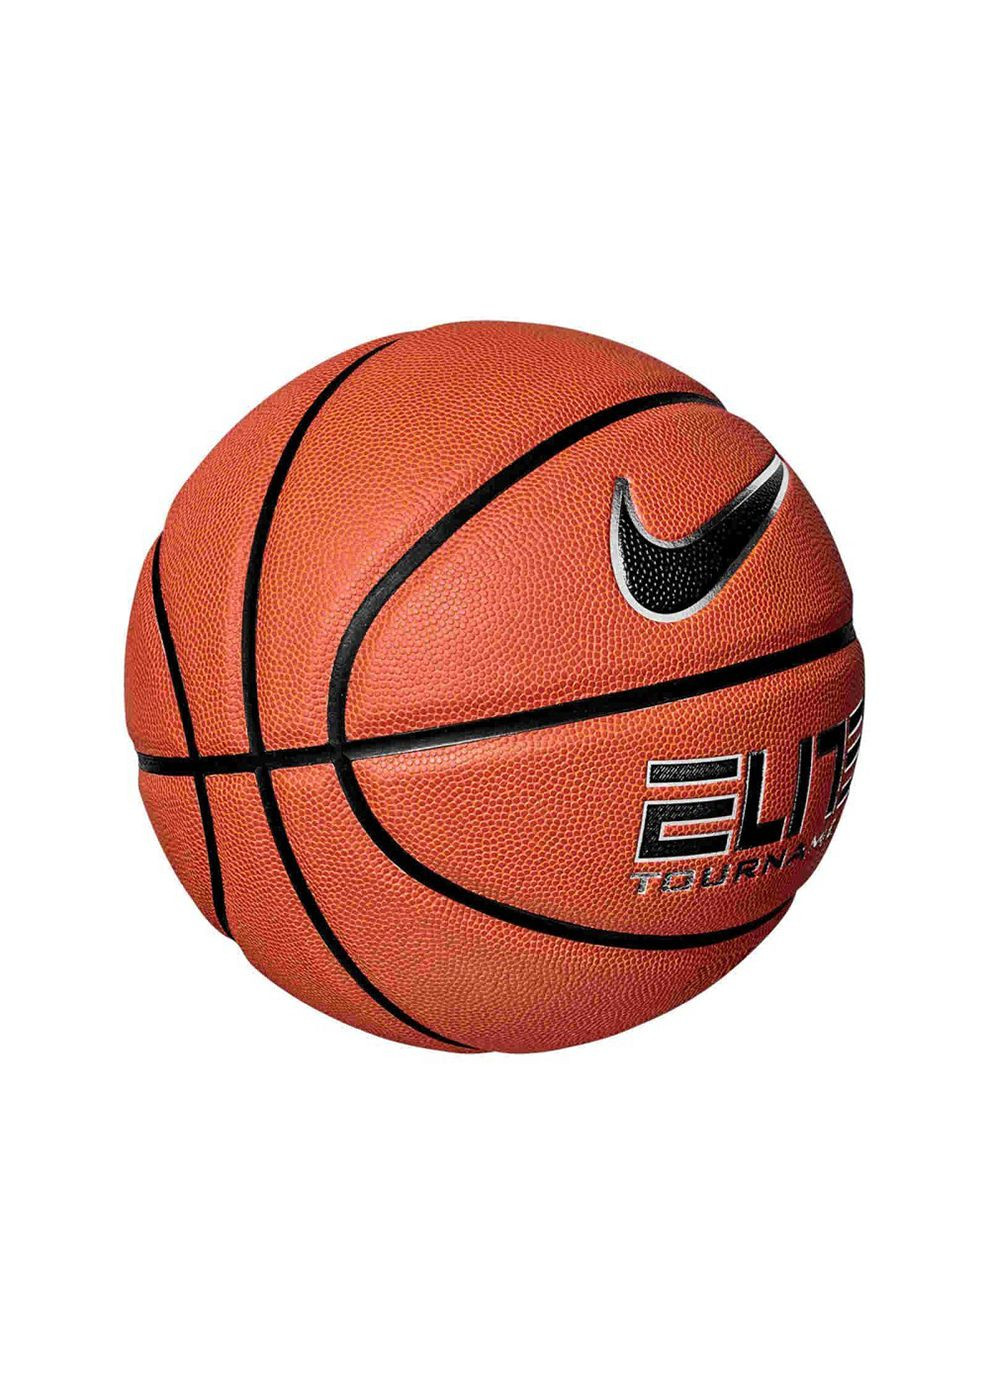 М'яч баскетбольний ELITE TOURNAMENT 8P DEFLATED помаранчевий Уні 7 Nike (268747100)